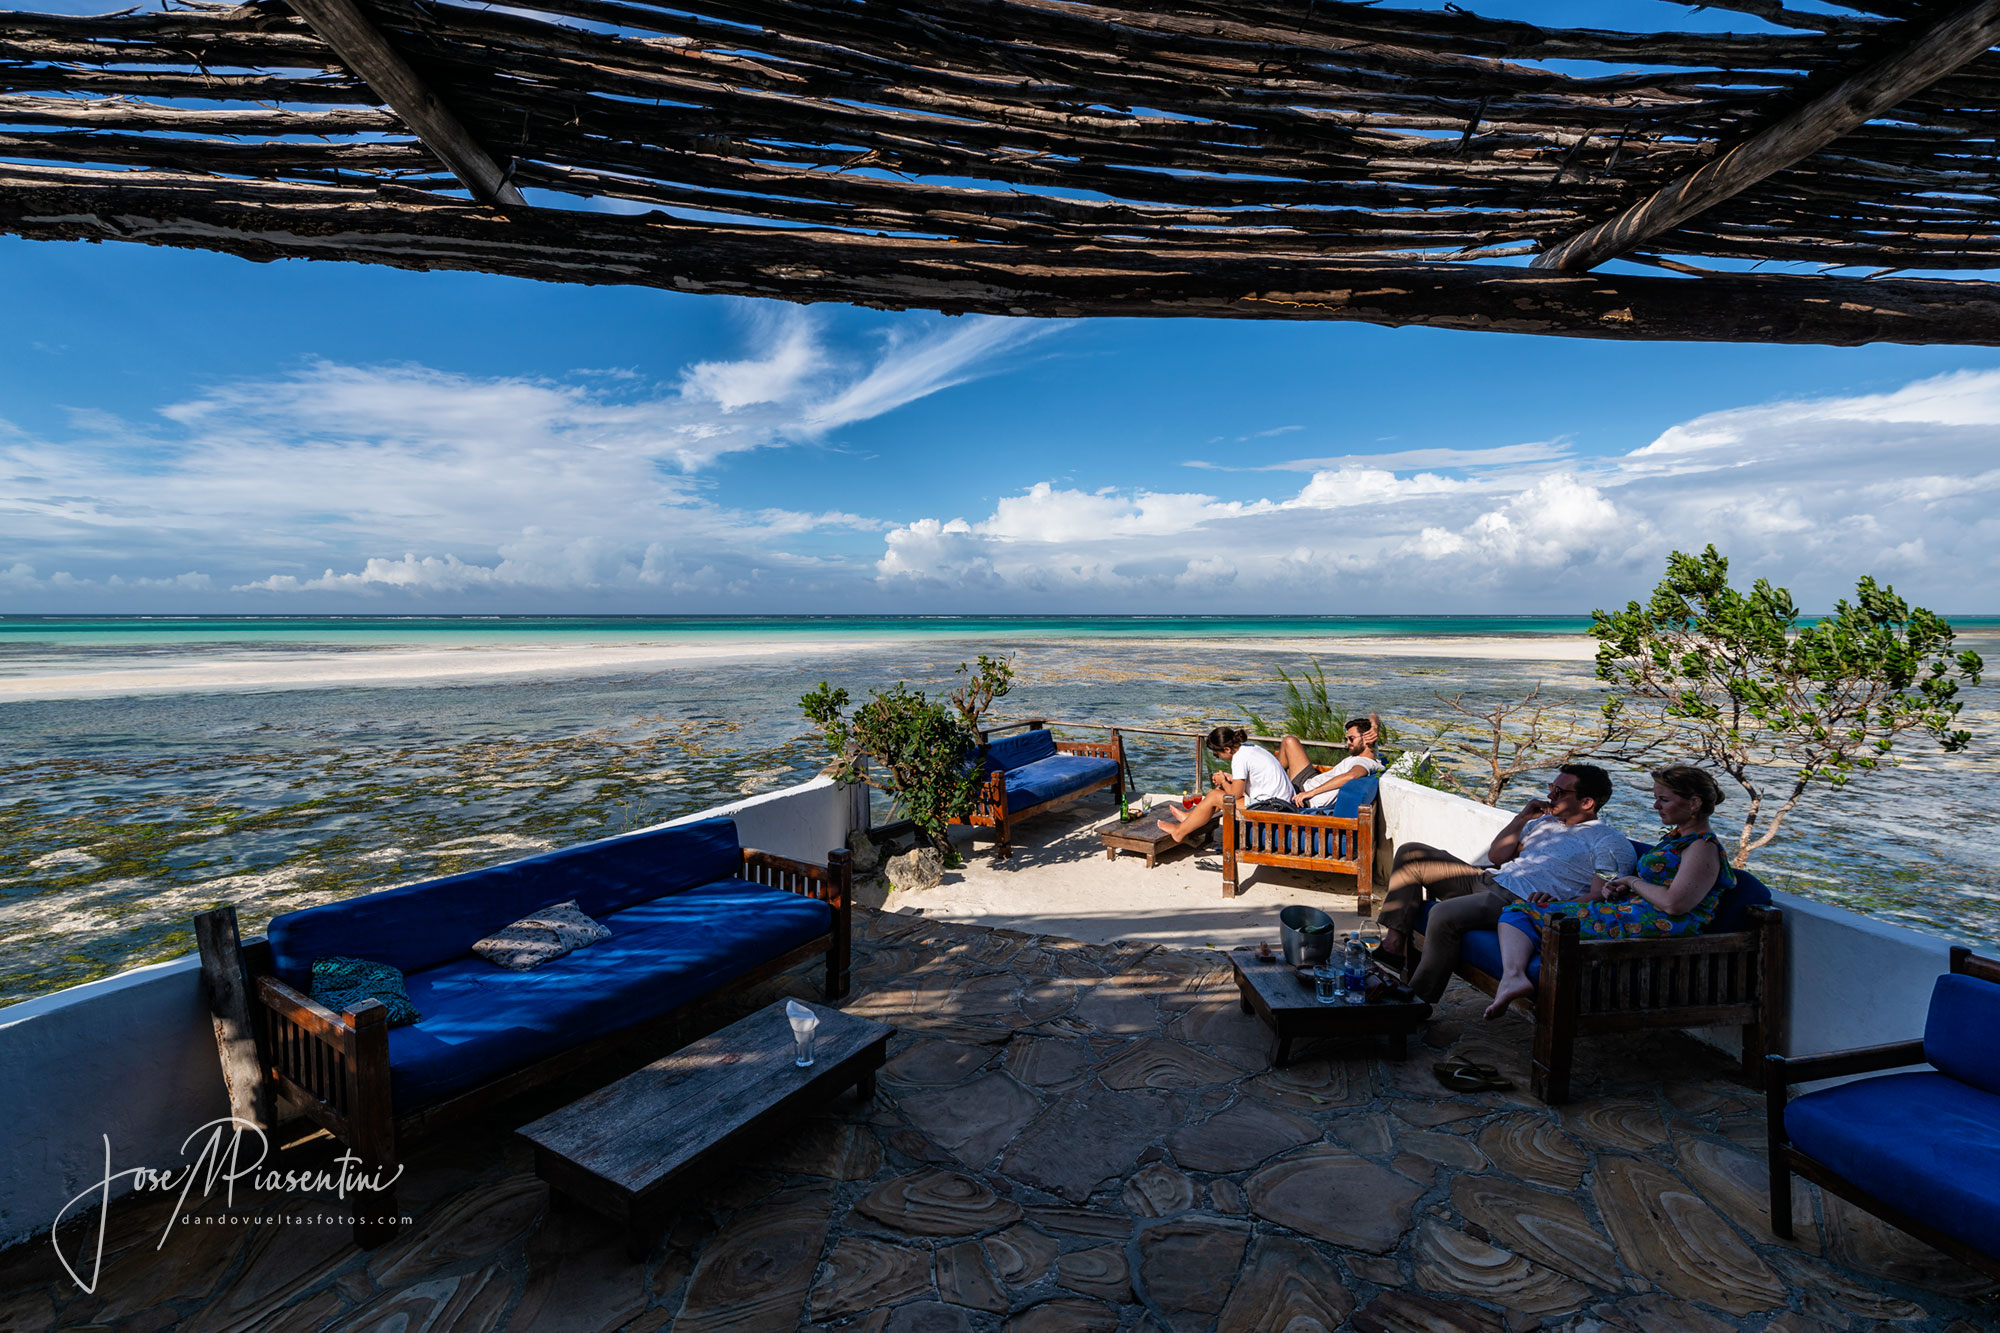 The Rock Zanzibar Restaurant